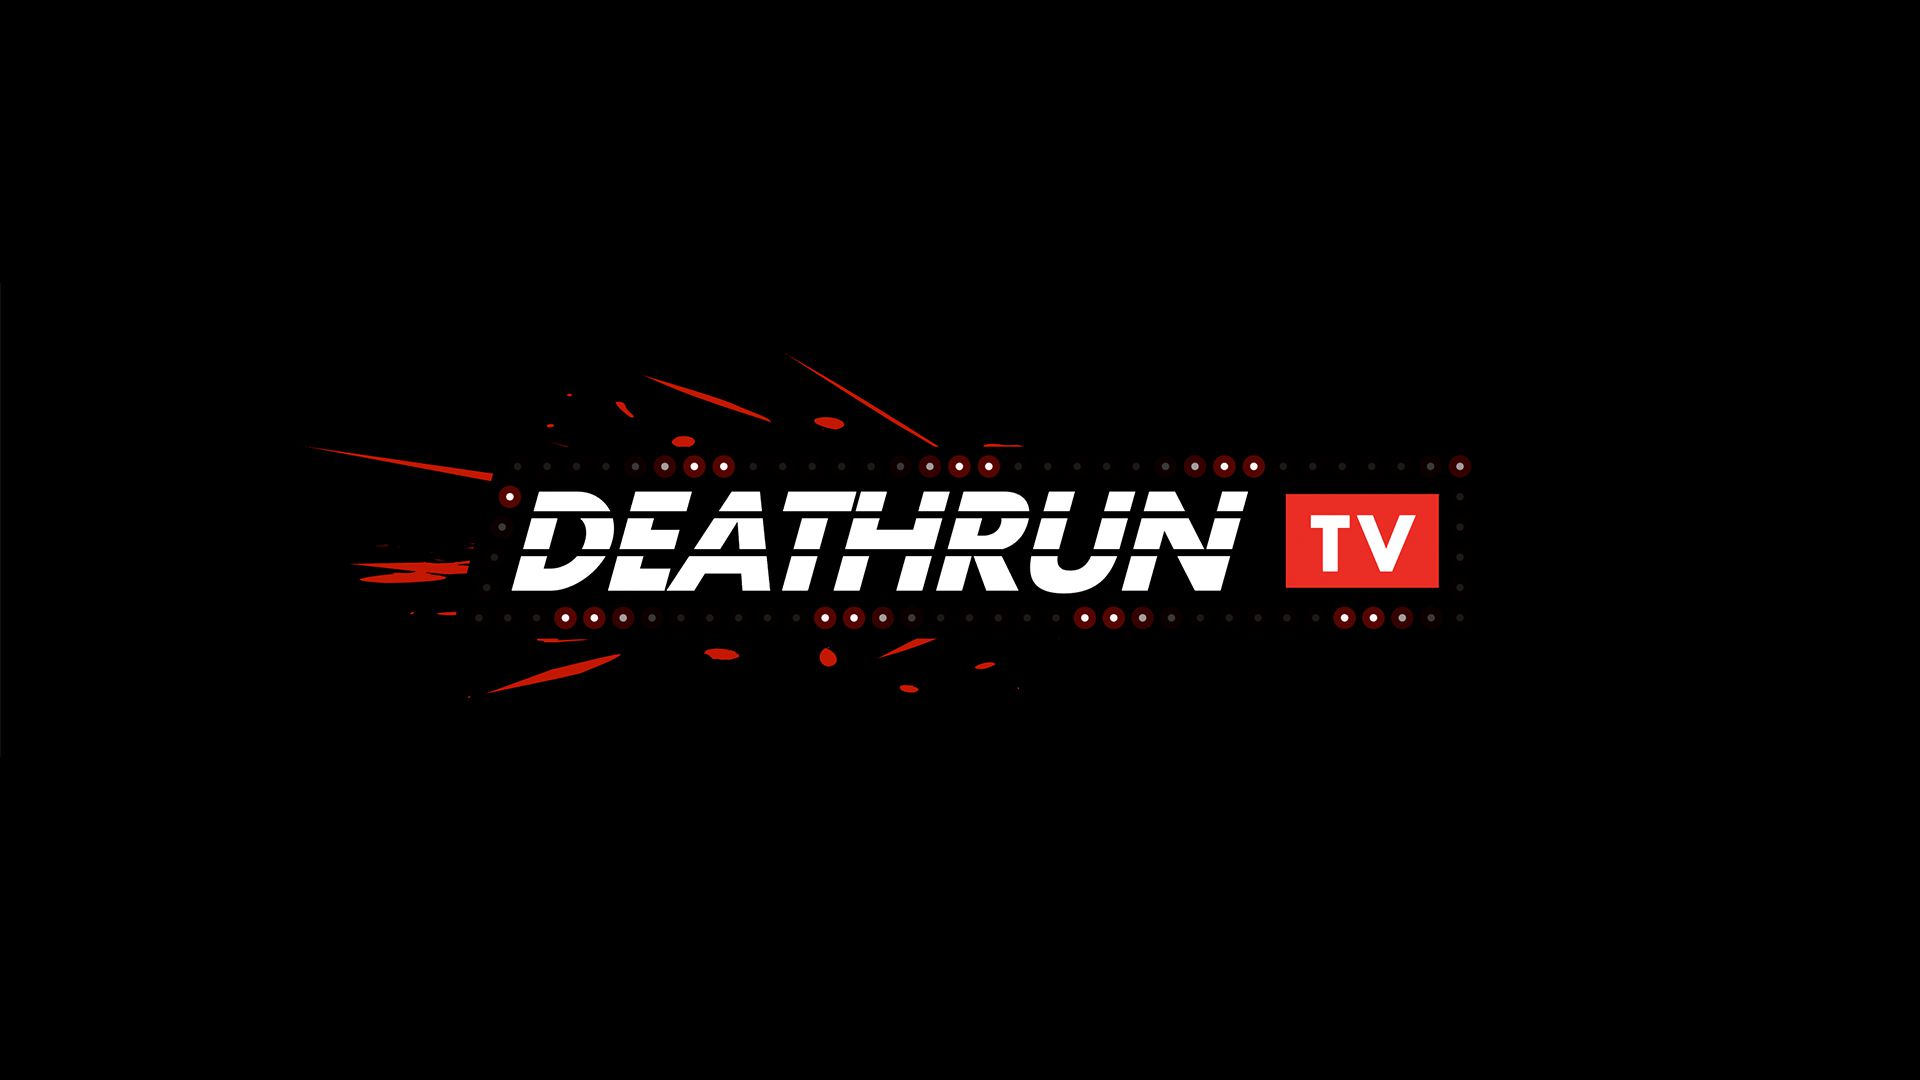 DEATHRUN TV instal the last version for ipod